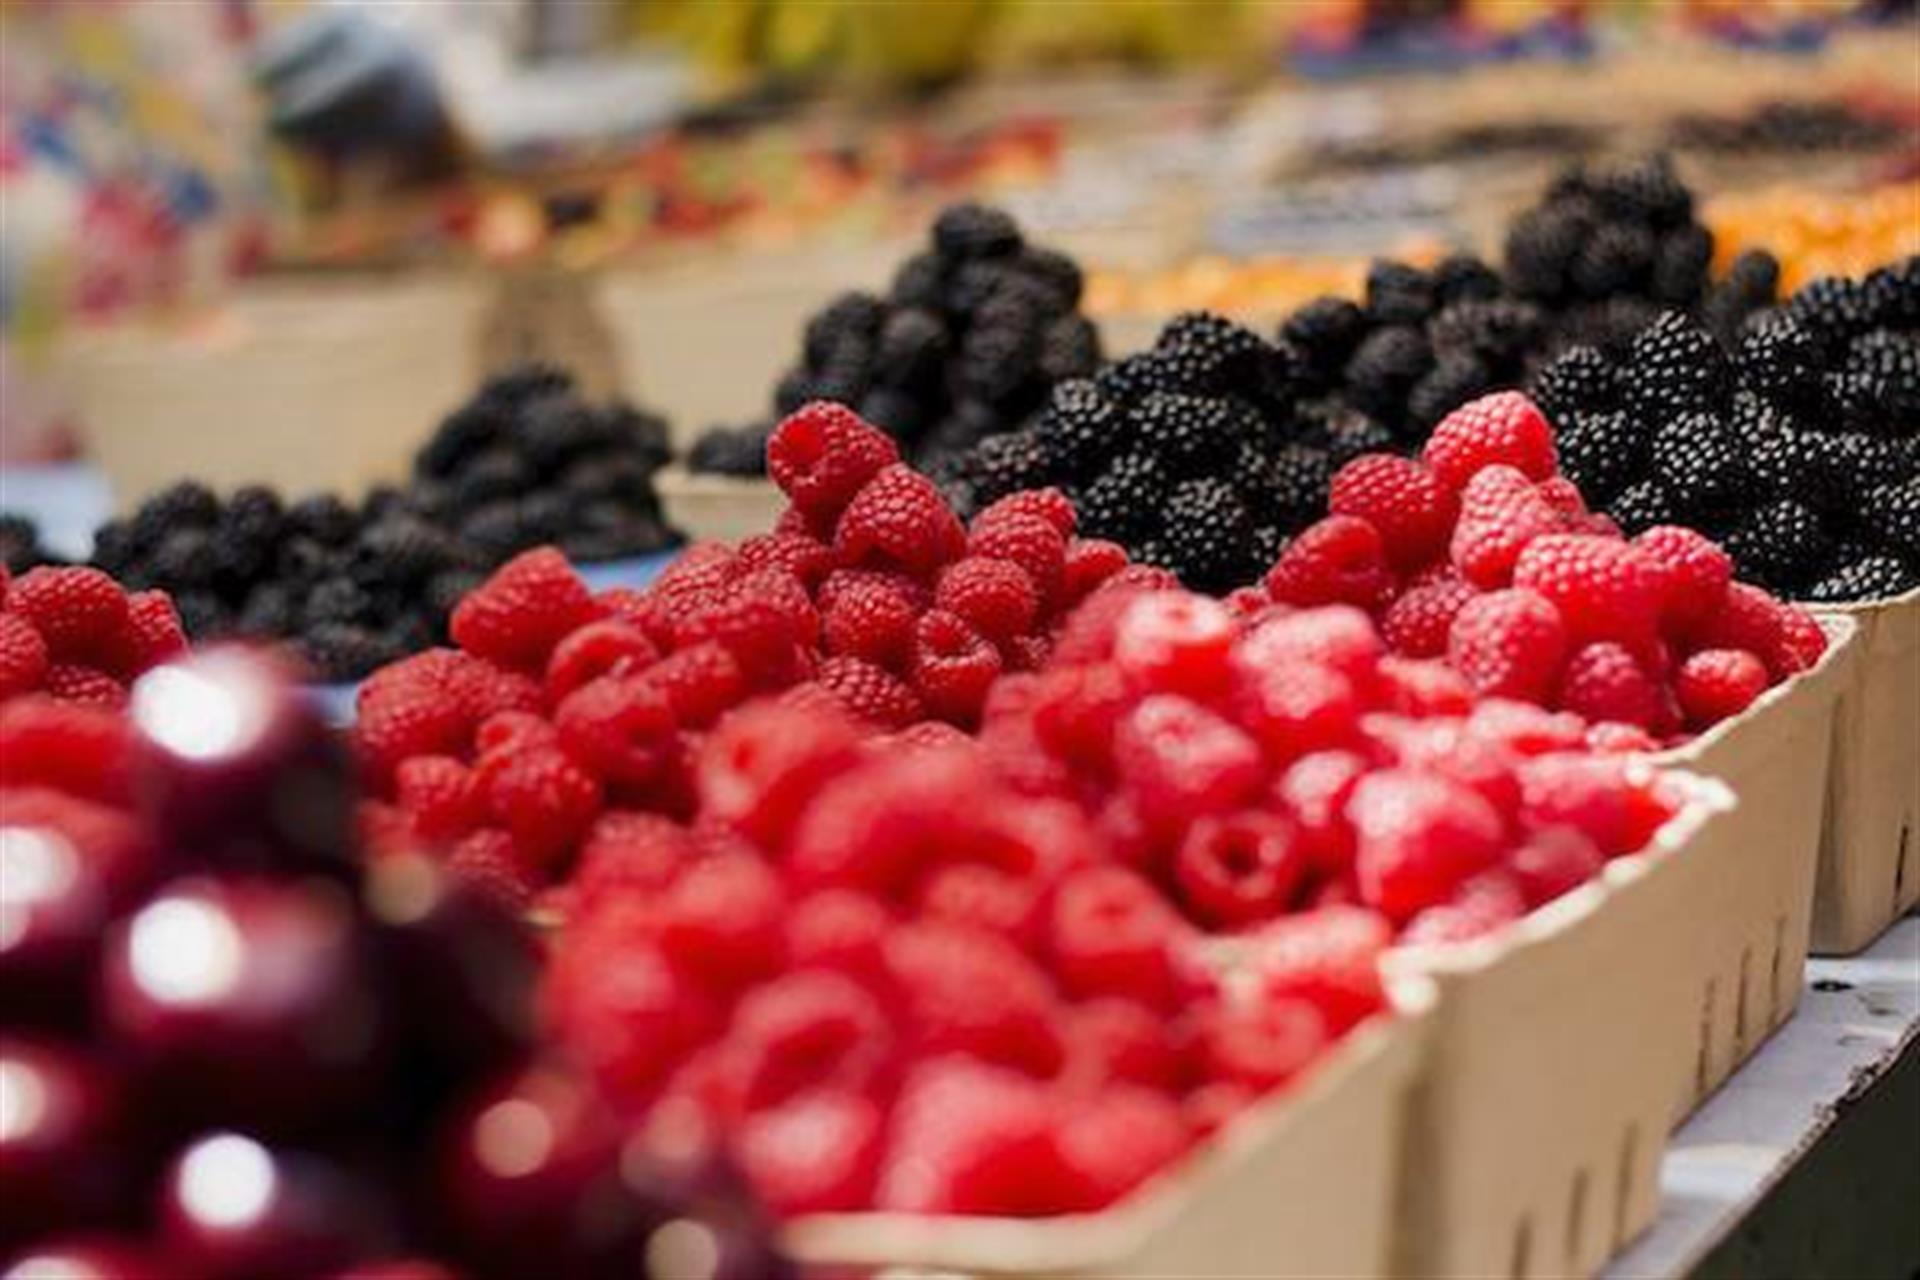 berries at farmers market